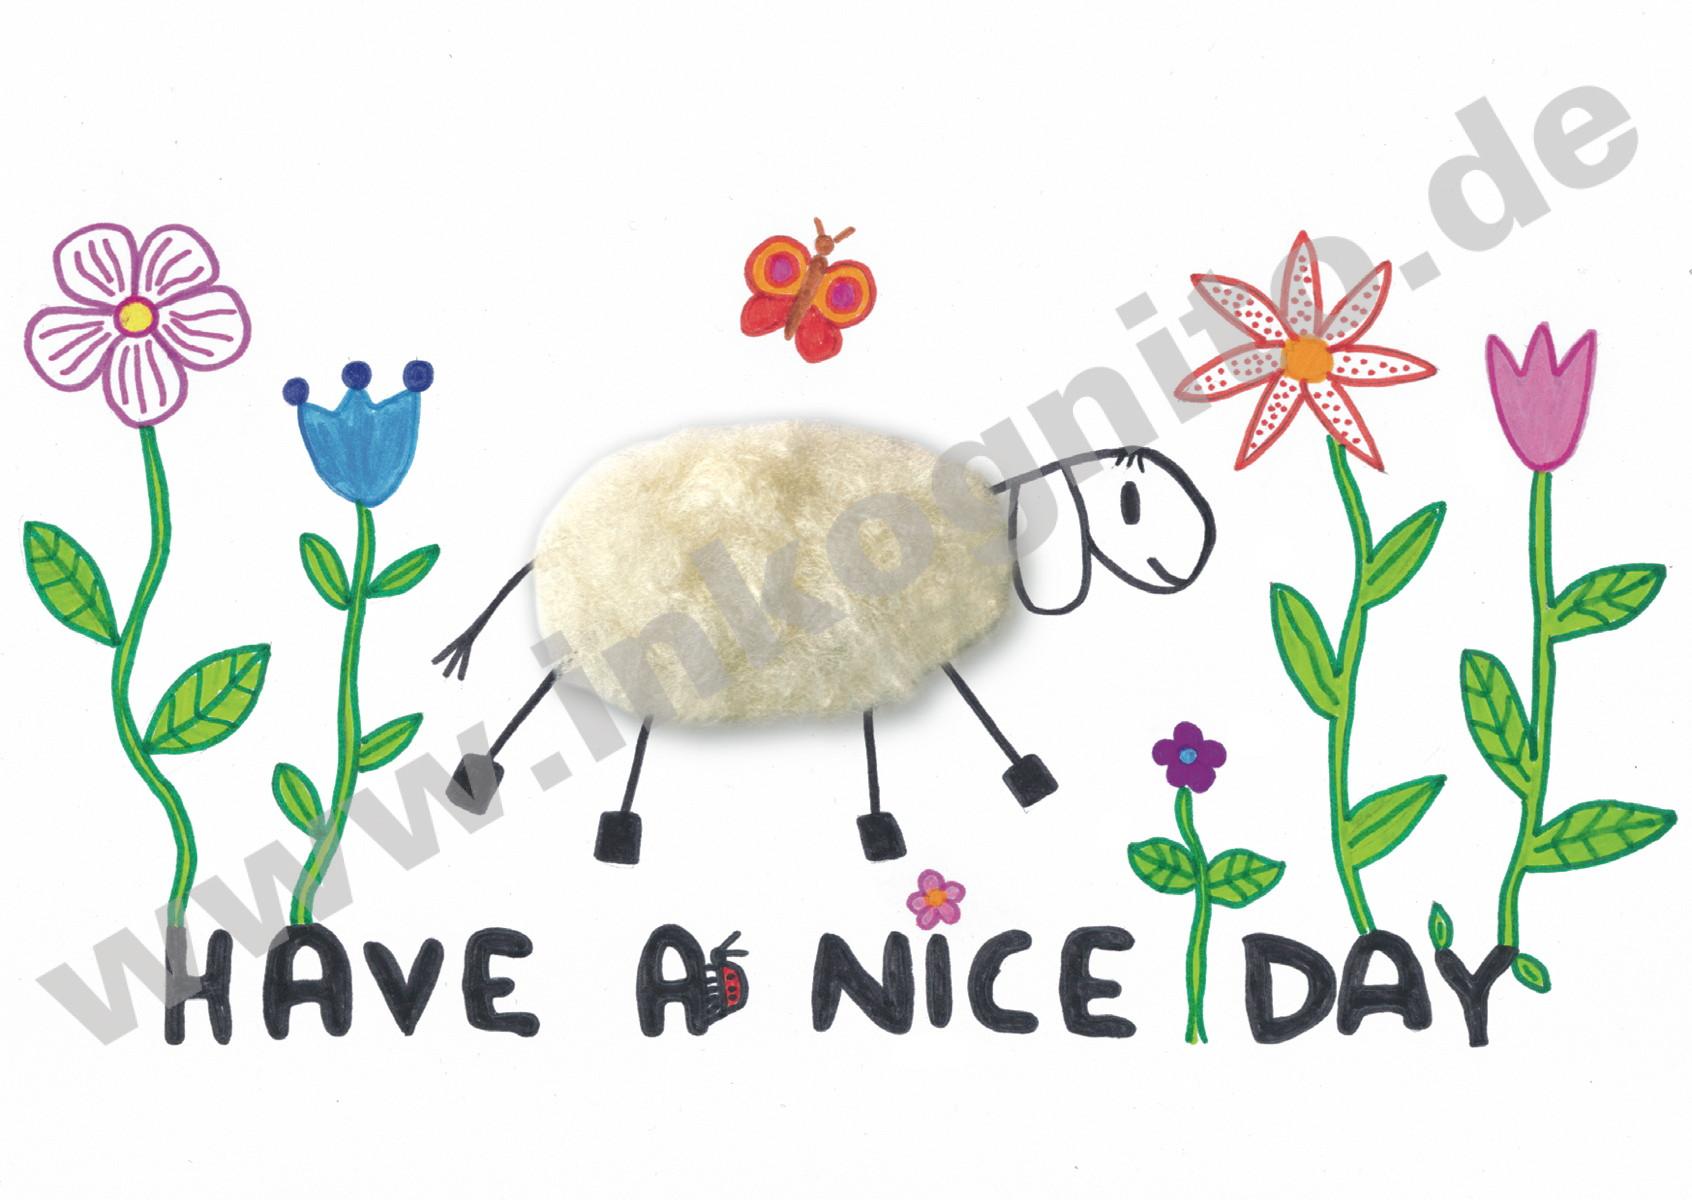 Plüschkarte "Have a nice day"